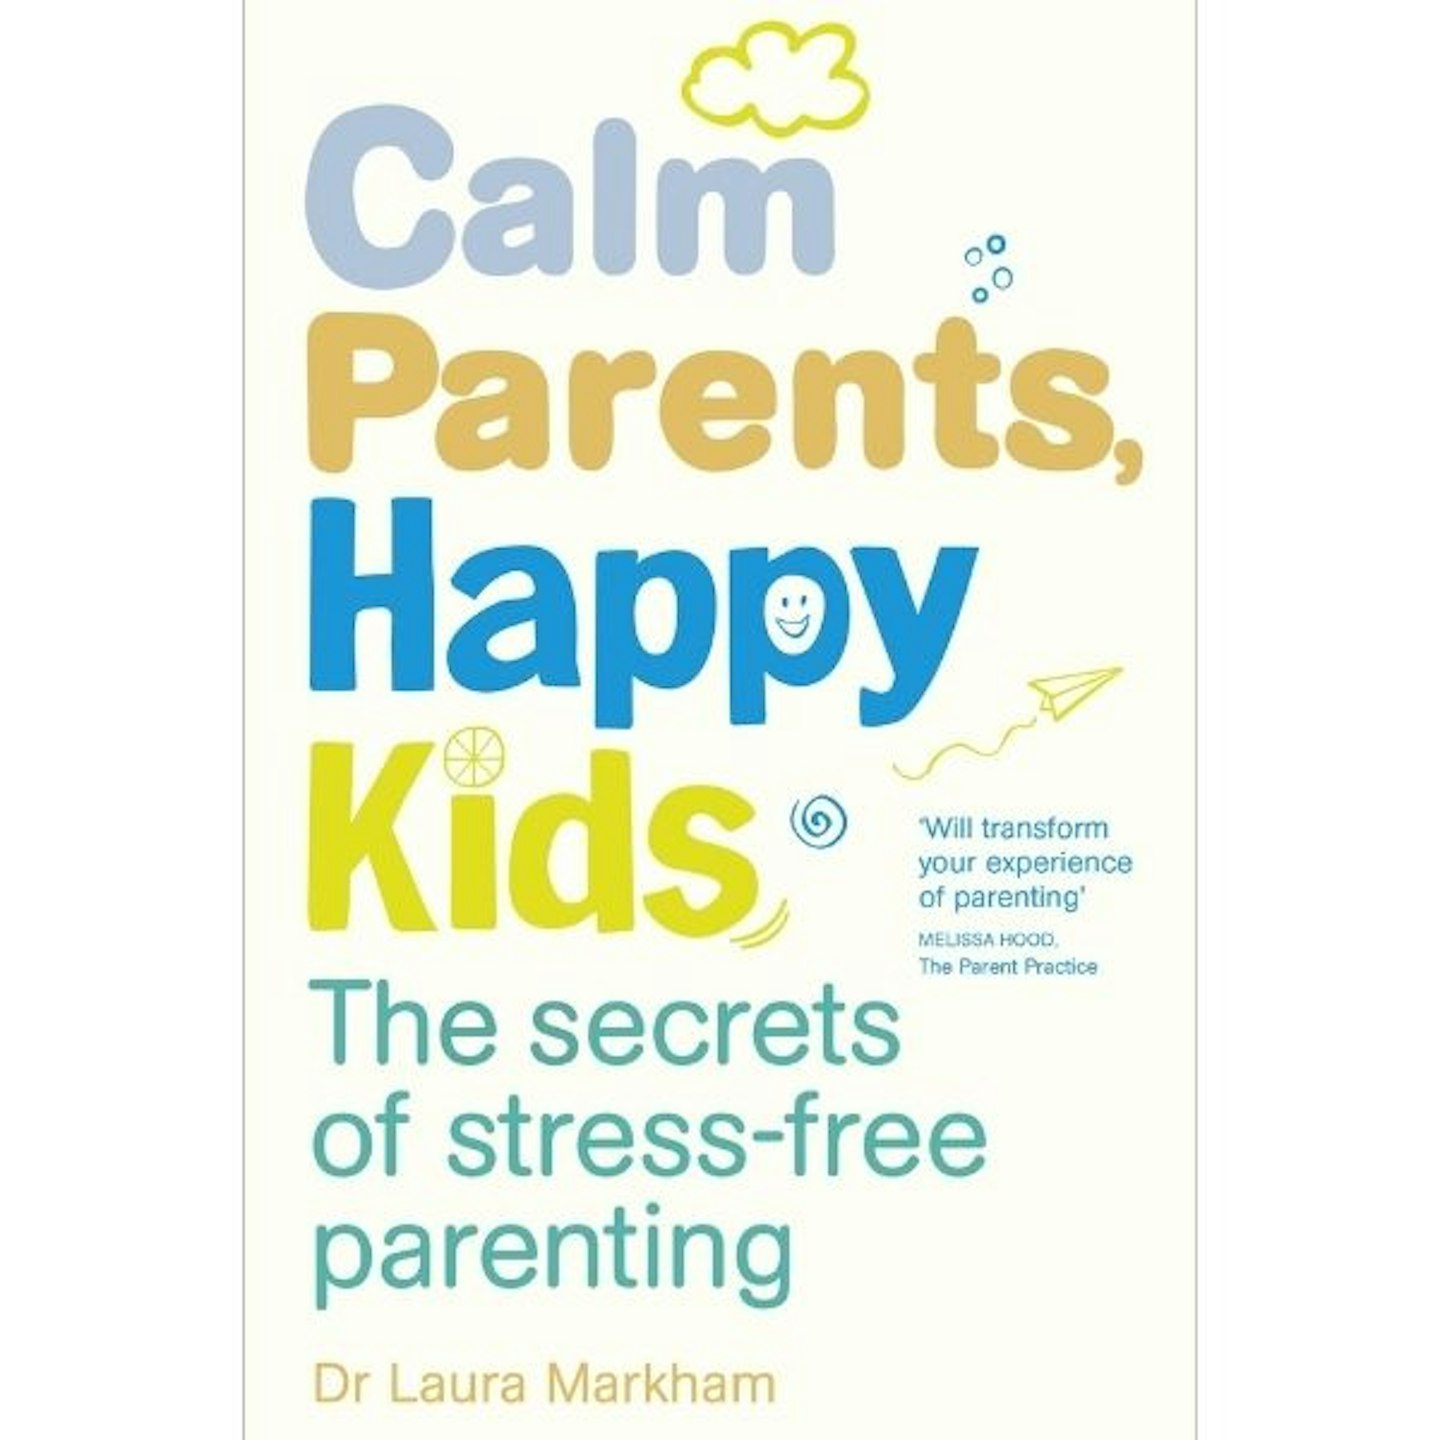 Calm Parents, Happy Kids: The Secrets Of Stress-Free Parenting, By Dr Laura Markham